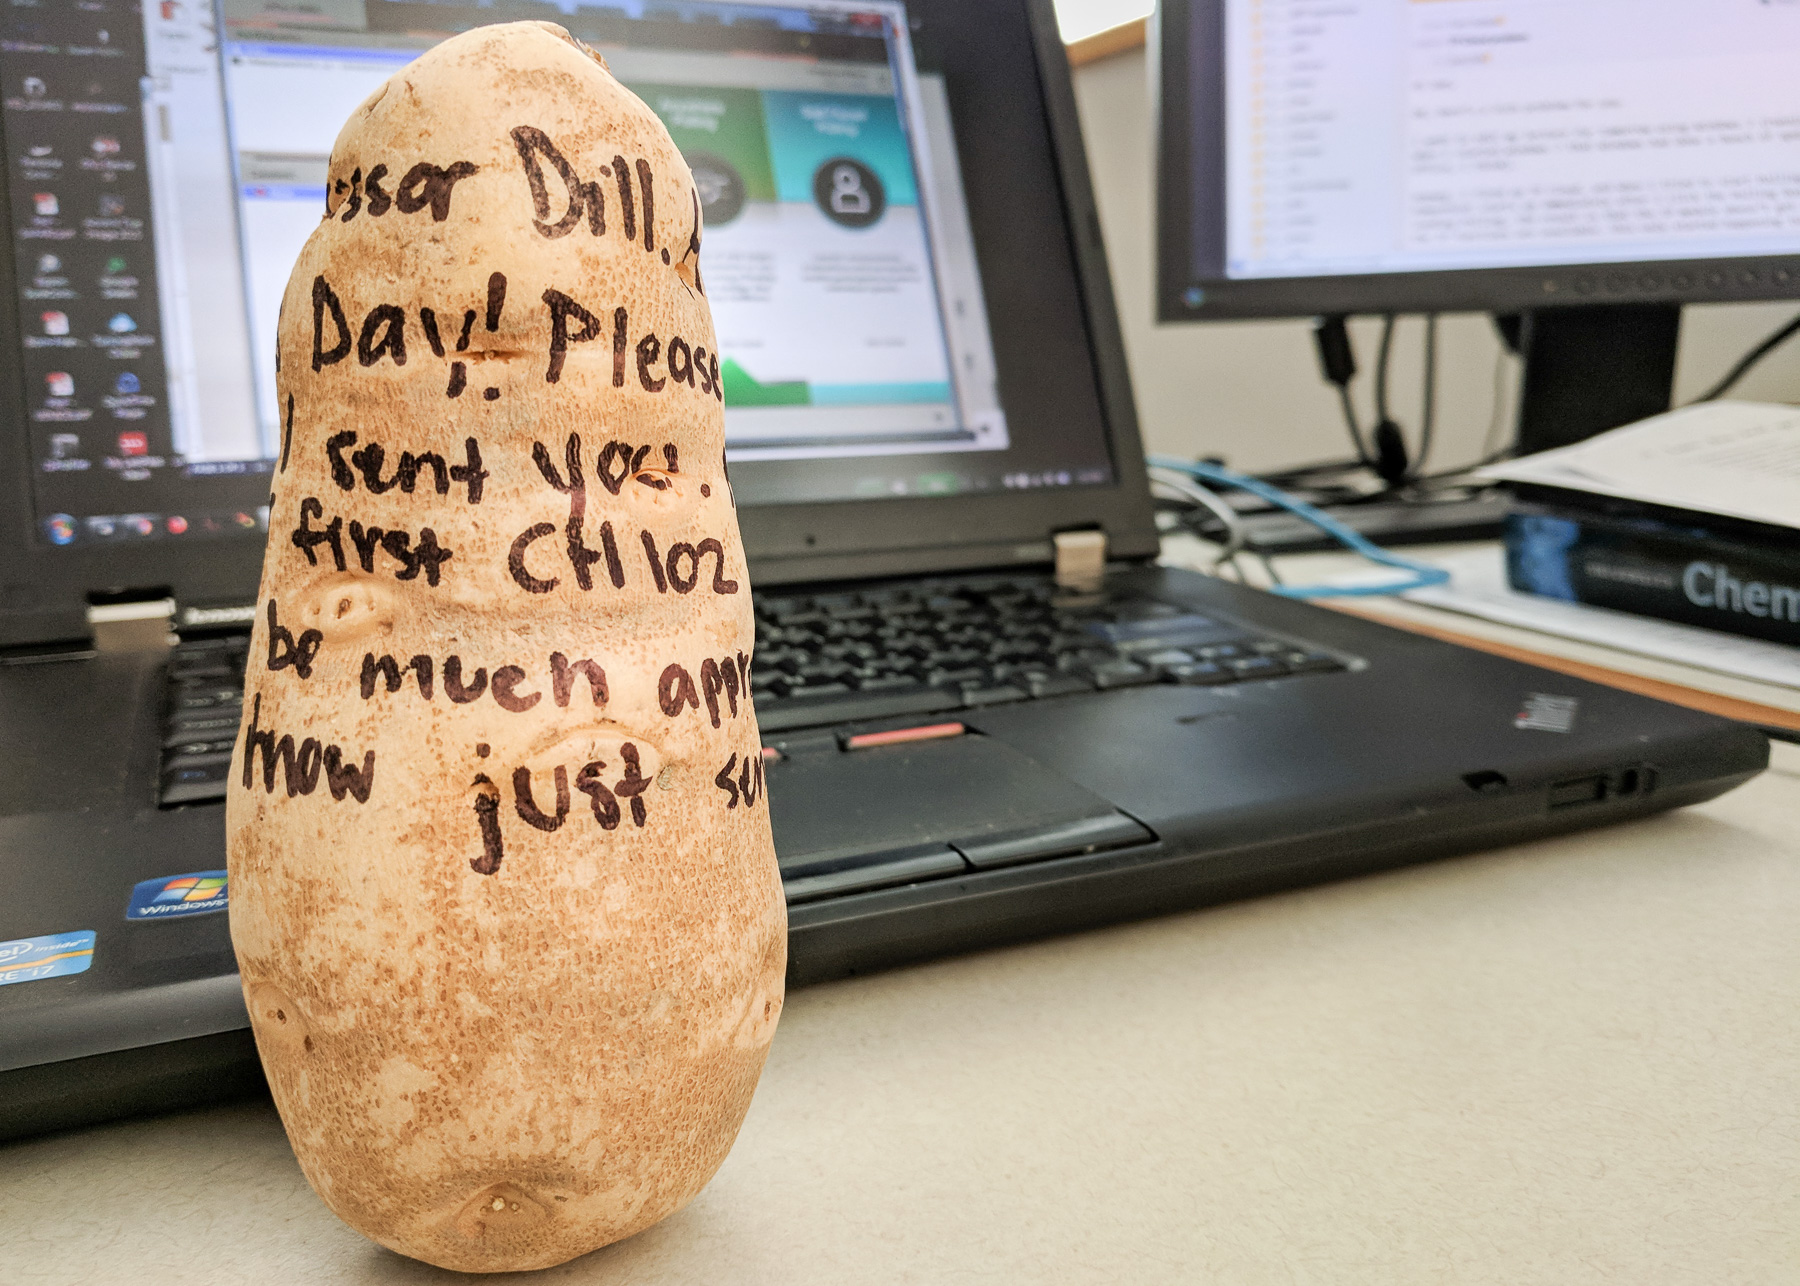 Dan Dill' first potatogram'